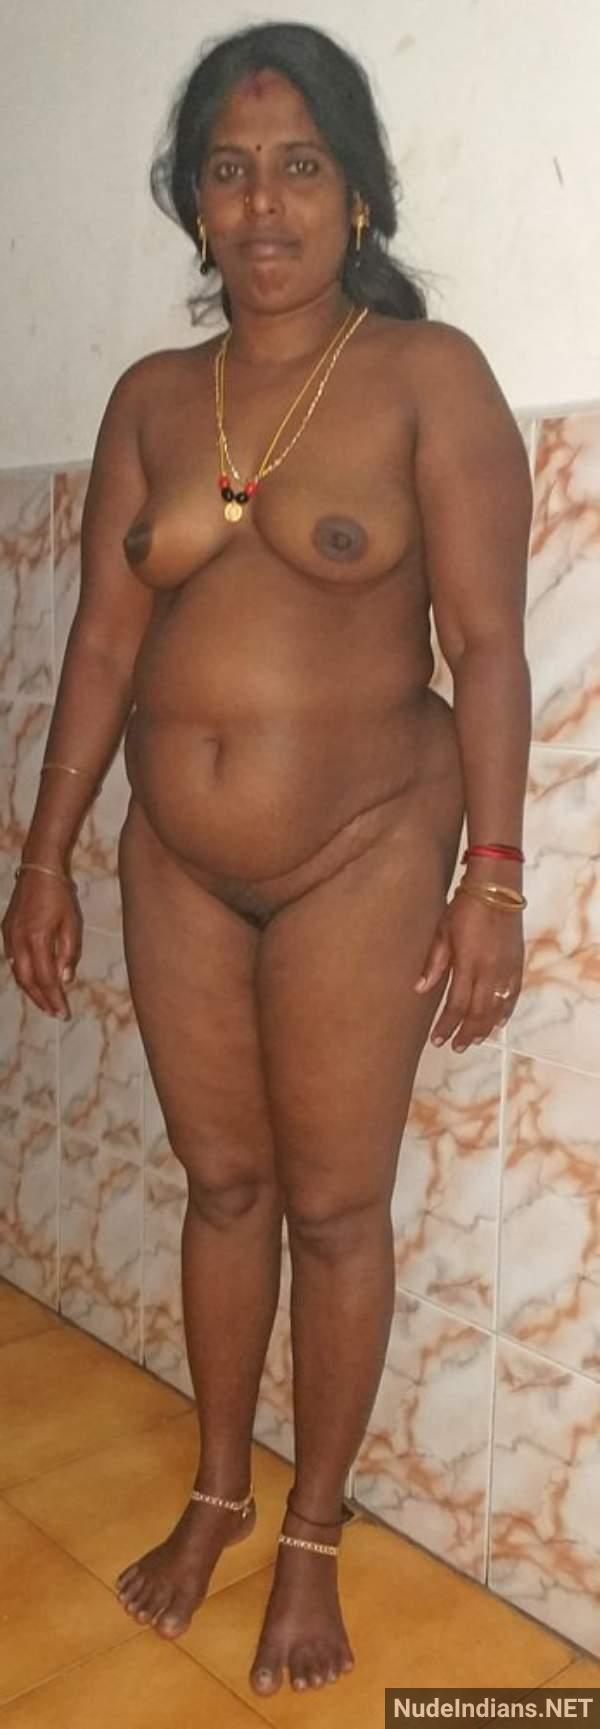 nude mallu bhabhi photos - 46